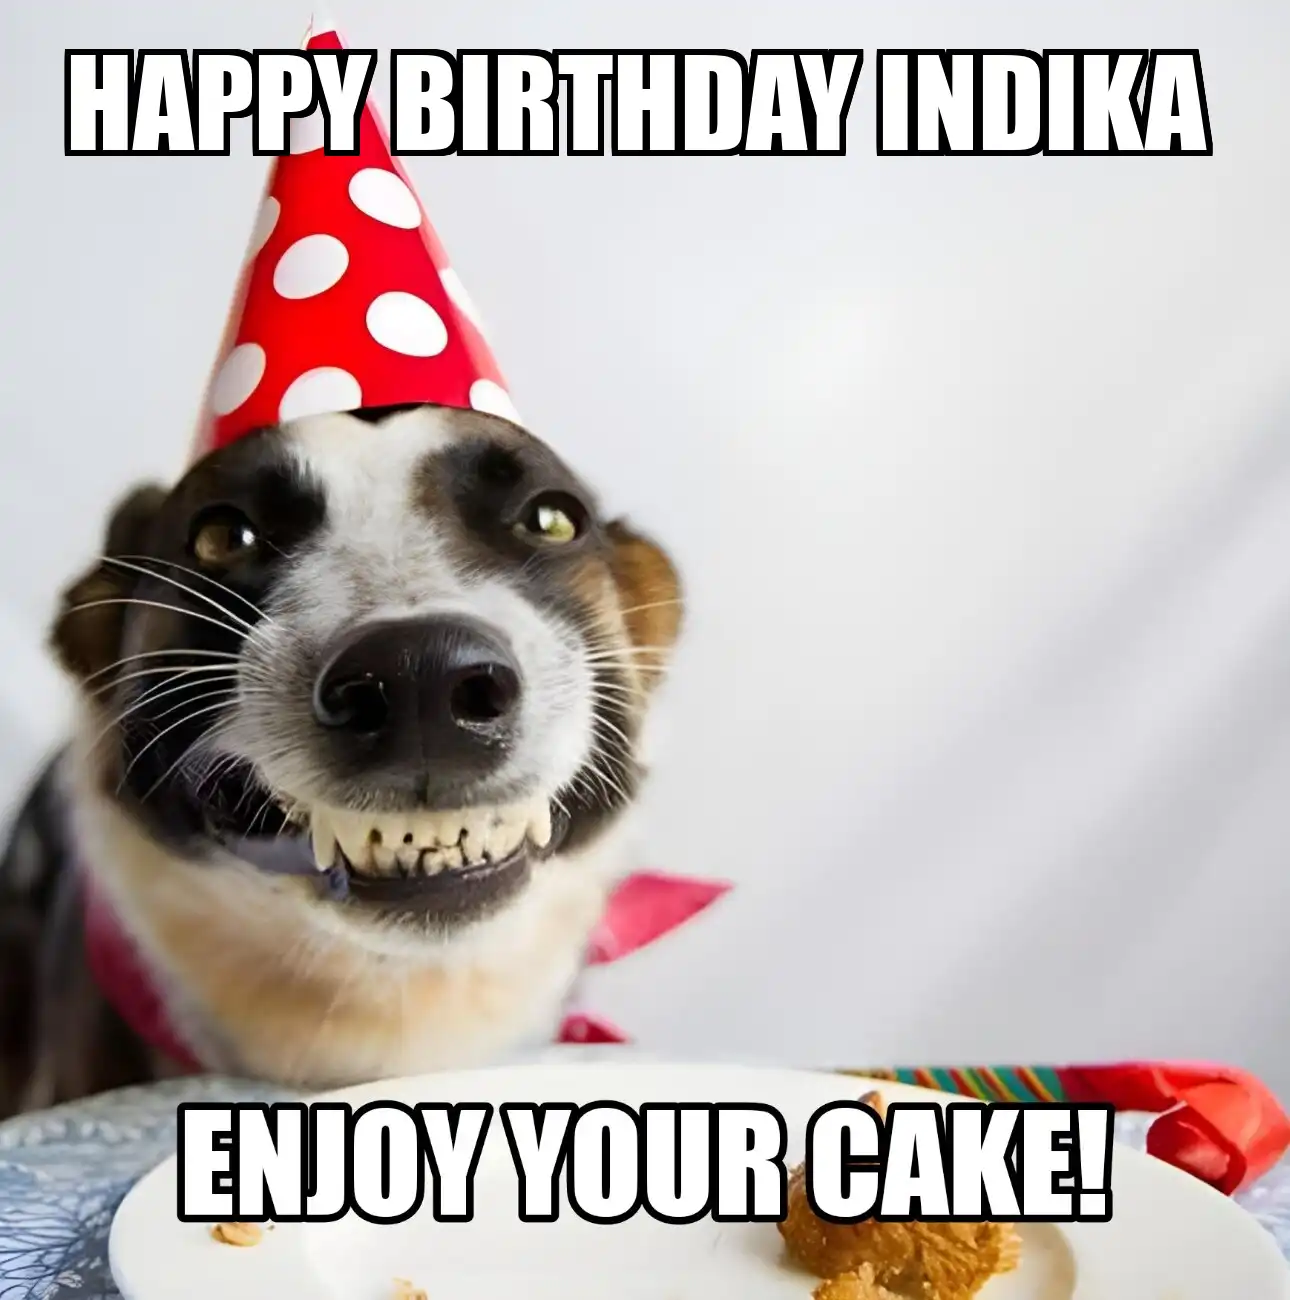 Happy Birthday Indika Enjoy Your Cake Dog Meme